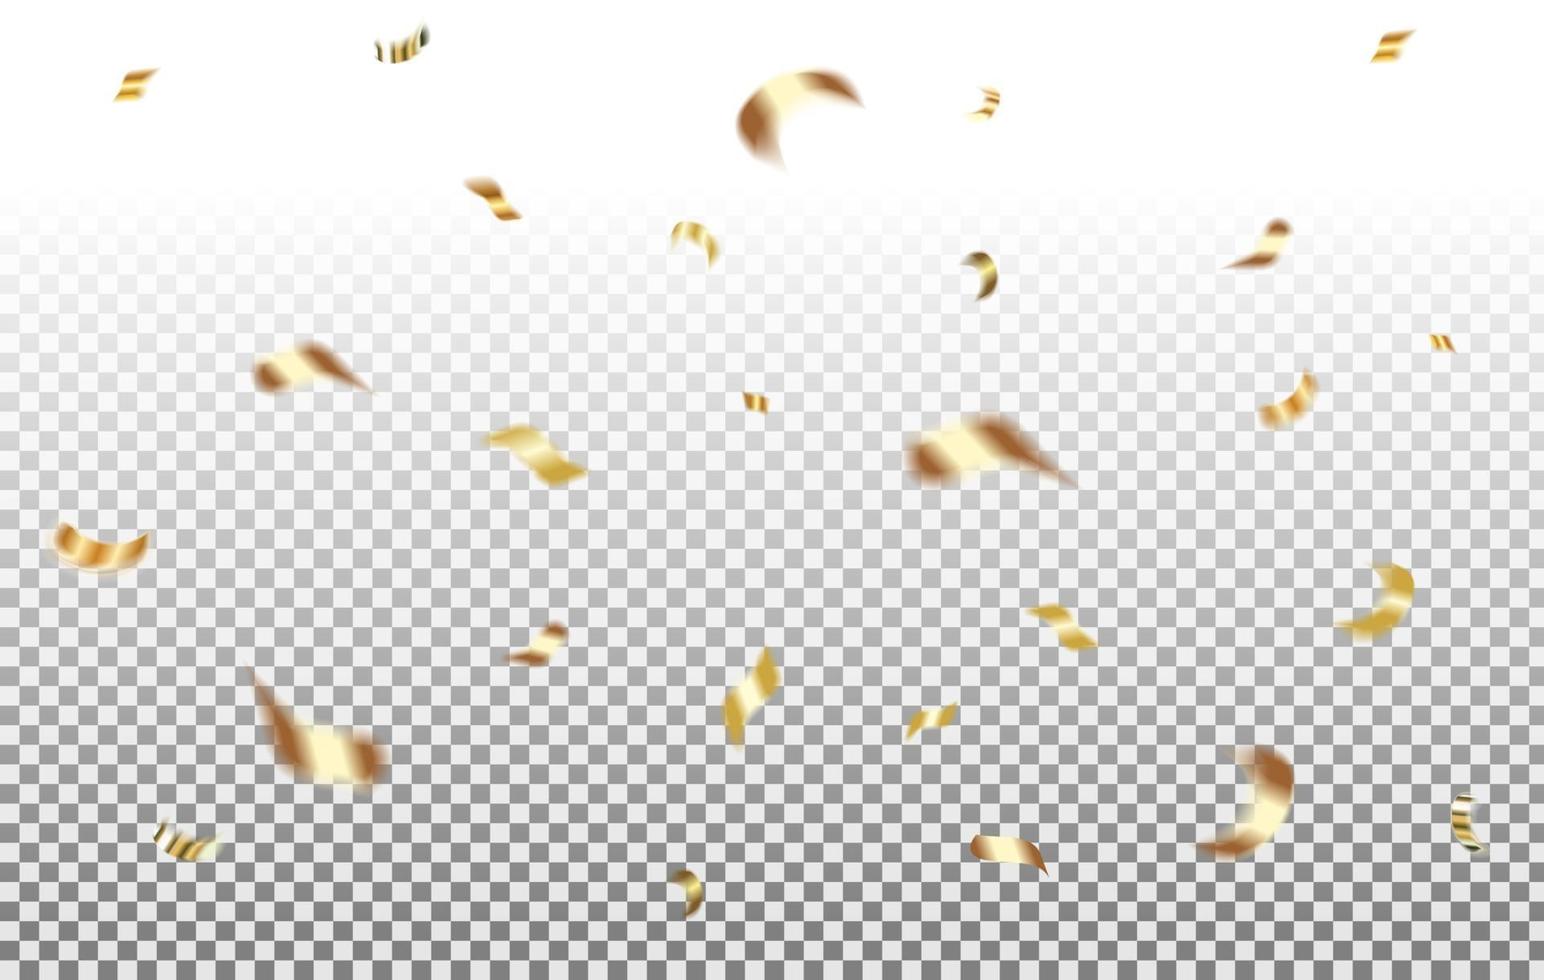 Falling golden glittering confetti. Festive Christmas banner. Invitation frame. Realistic illustration isolated on transparent background. Vector. vector